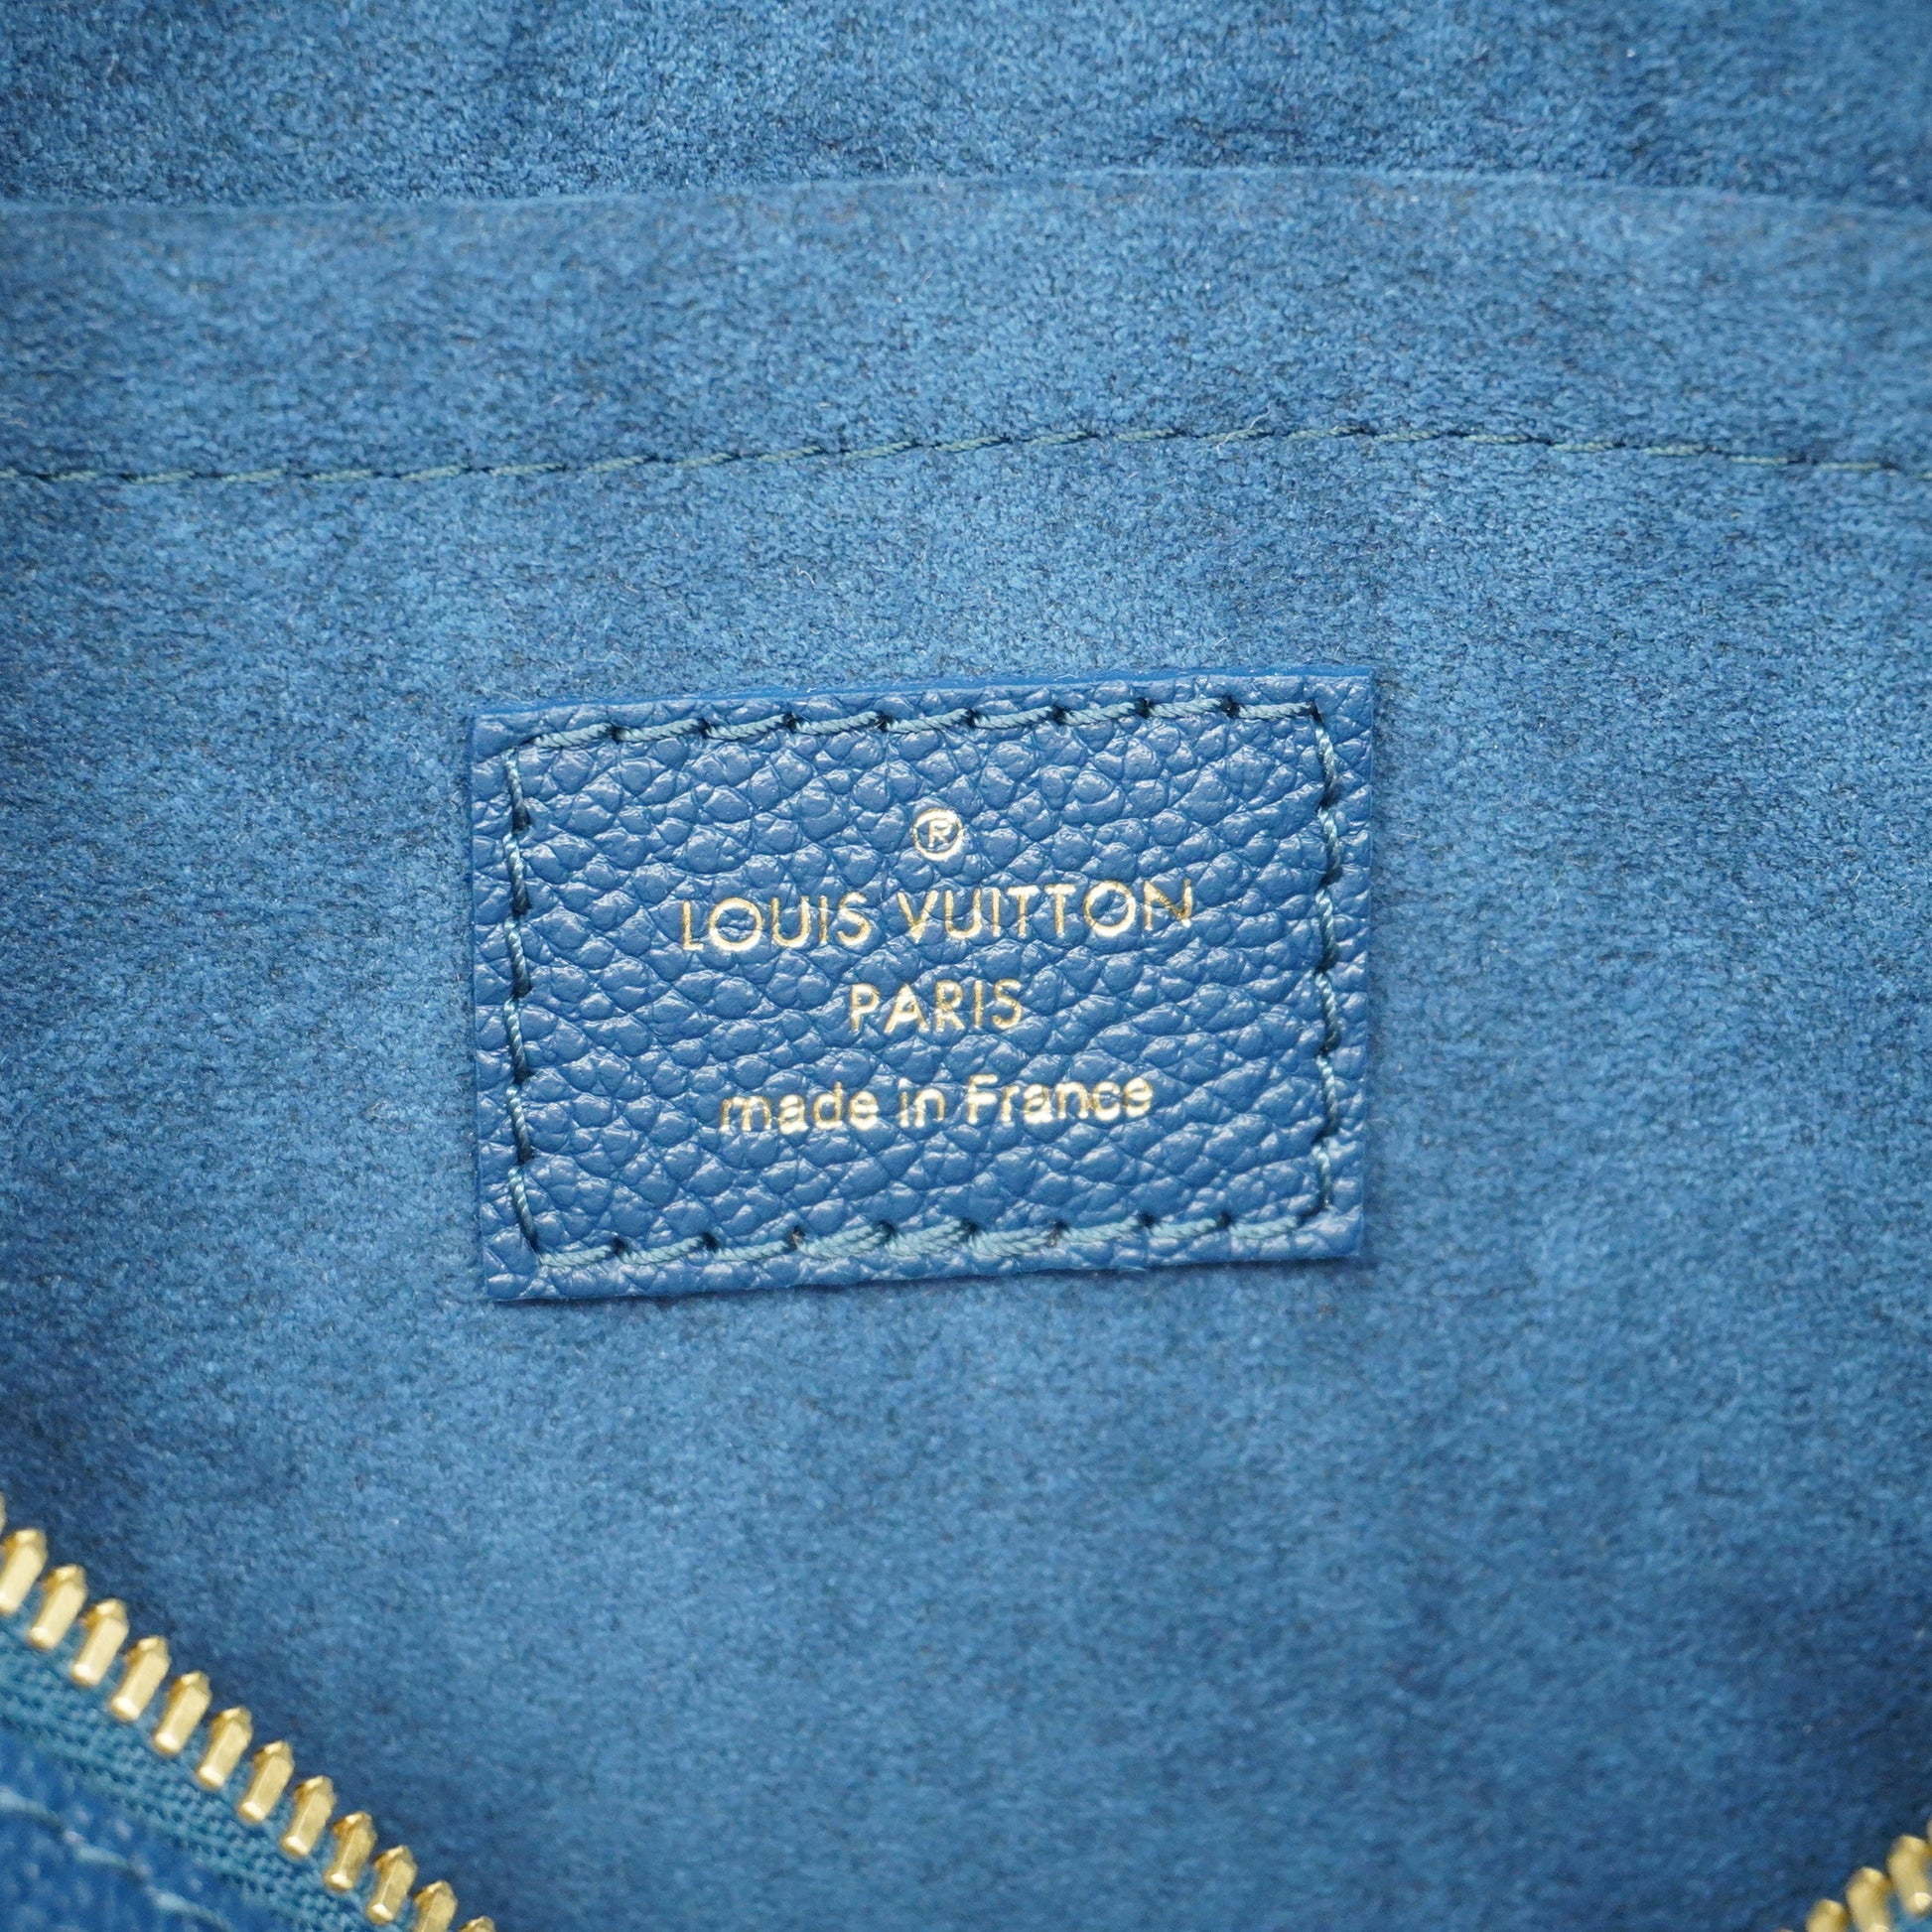 Shop Louis Vuitton SPEEDY Handbags (M46517, M46518) by luxurysuite